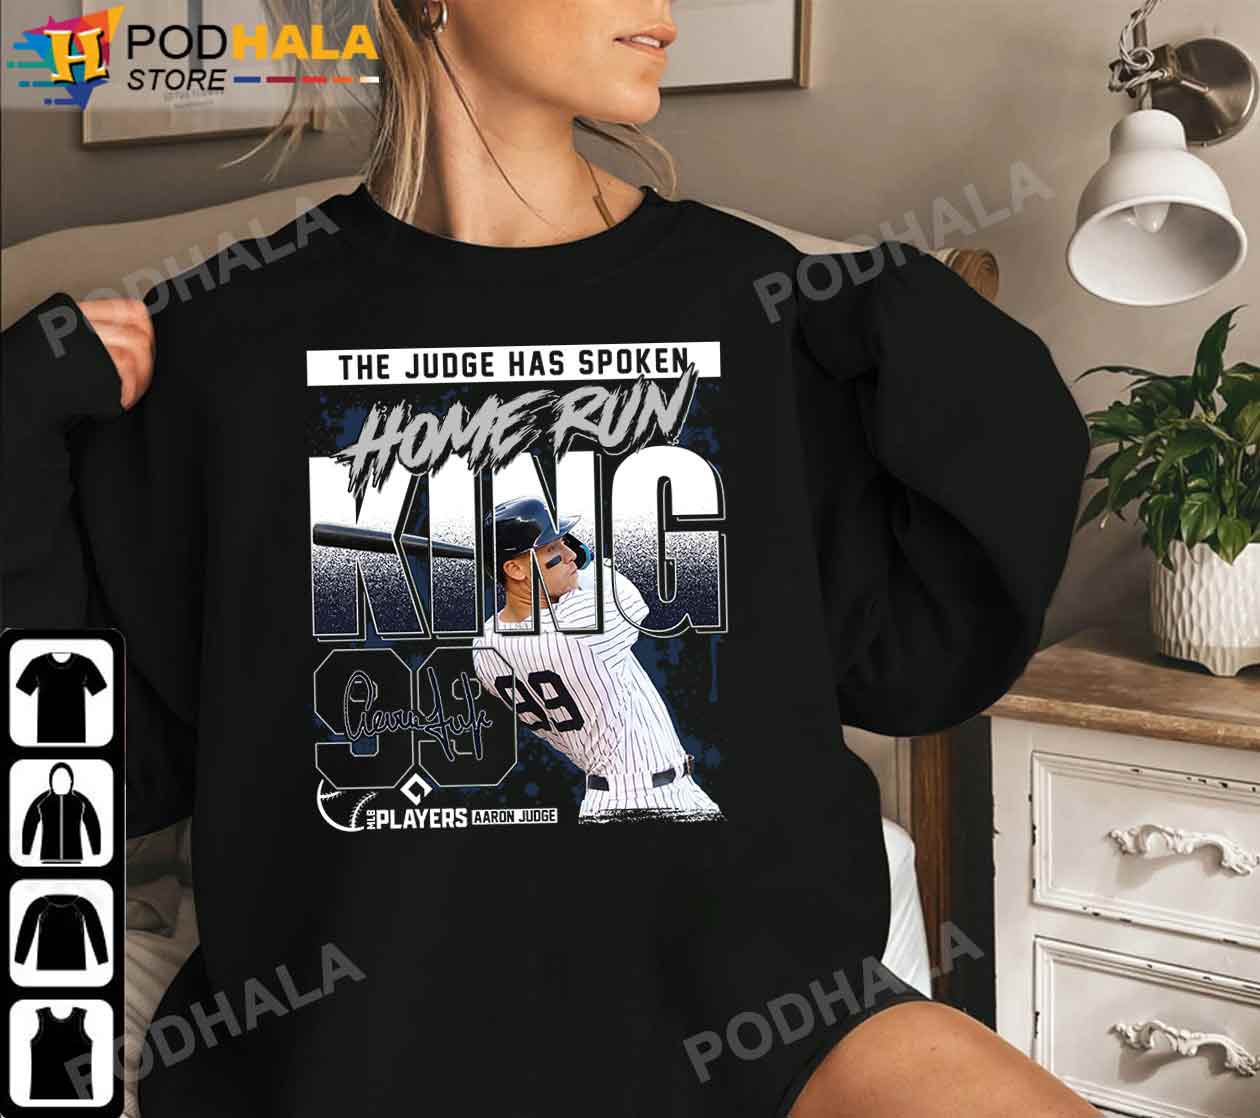 Loyalty Aaron Judge New York MLBPA Shirt, Womens Yankee Shirt